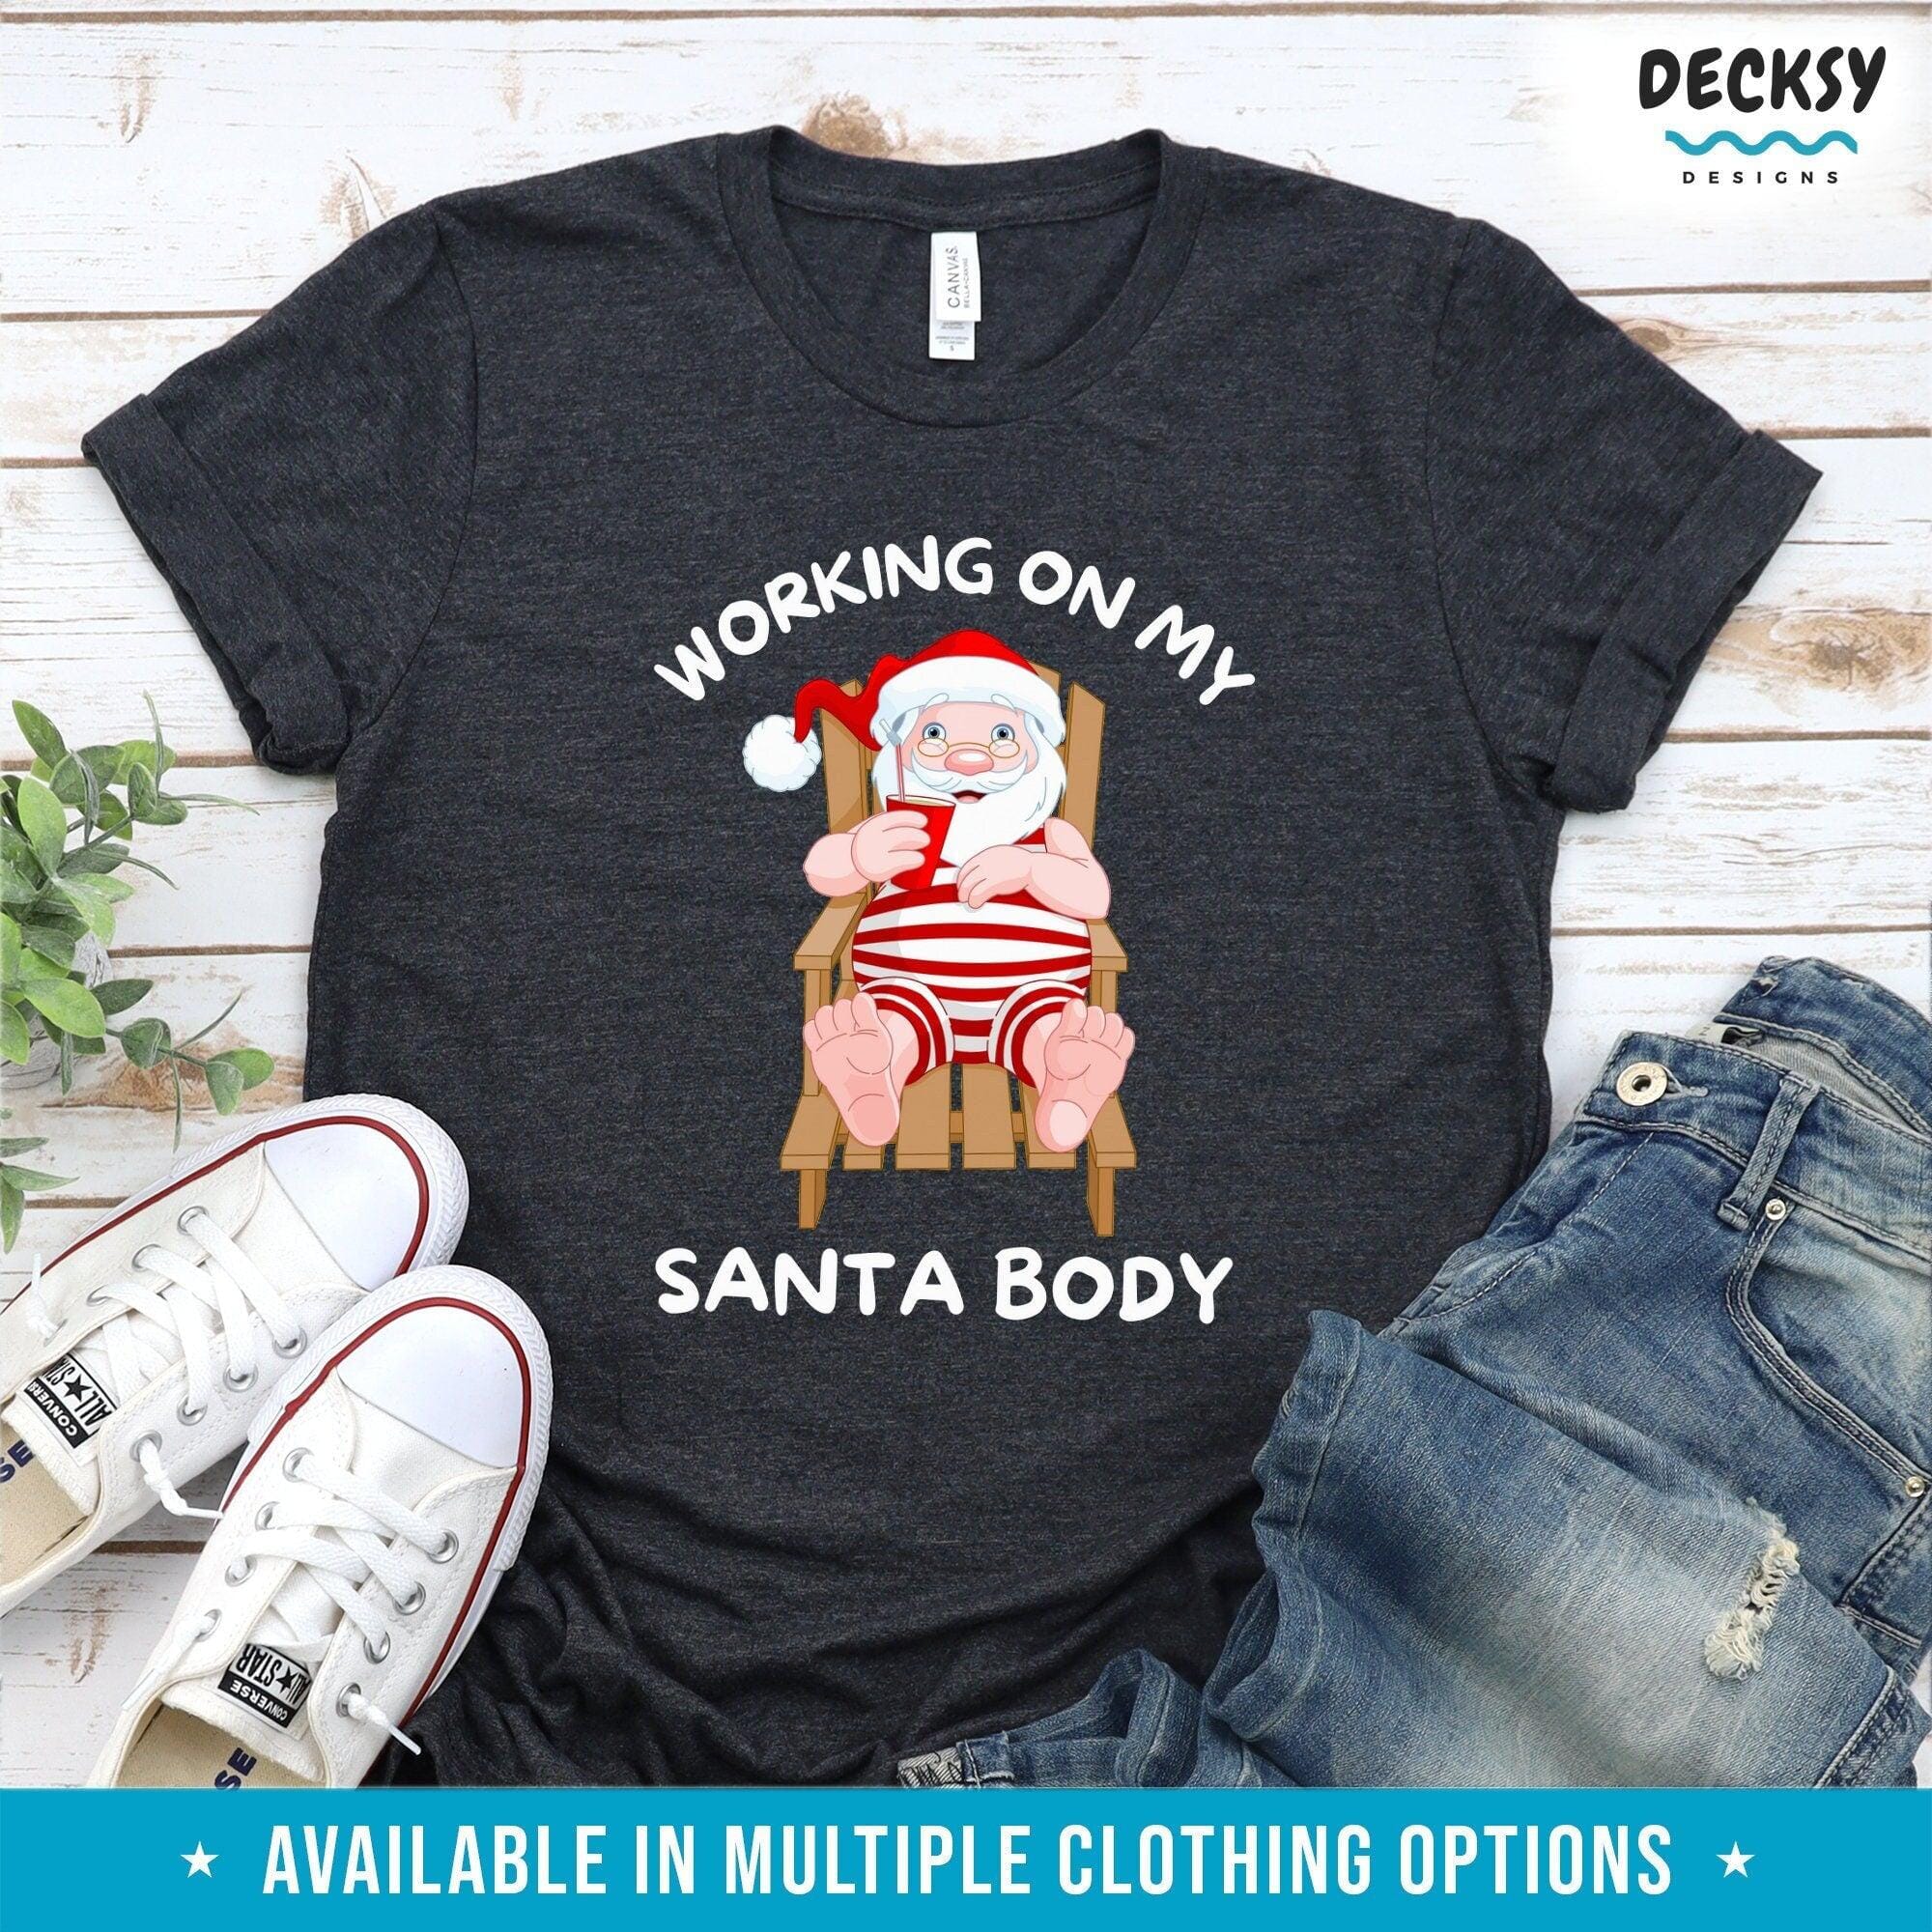 Funny Xmas Tshirt, Christmas Gift-Clothing:Gender-Neutral Adult Clothing:Tops & Tees:T-shirts:Graphic Tees-DecksyDesigns